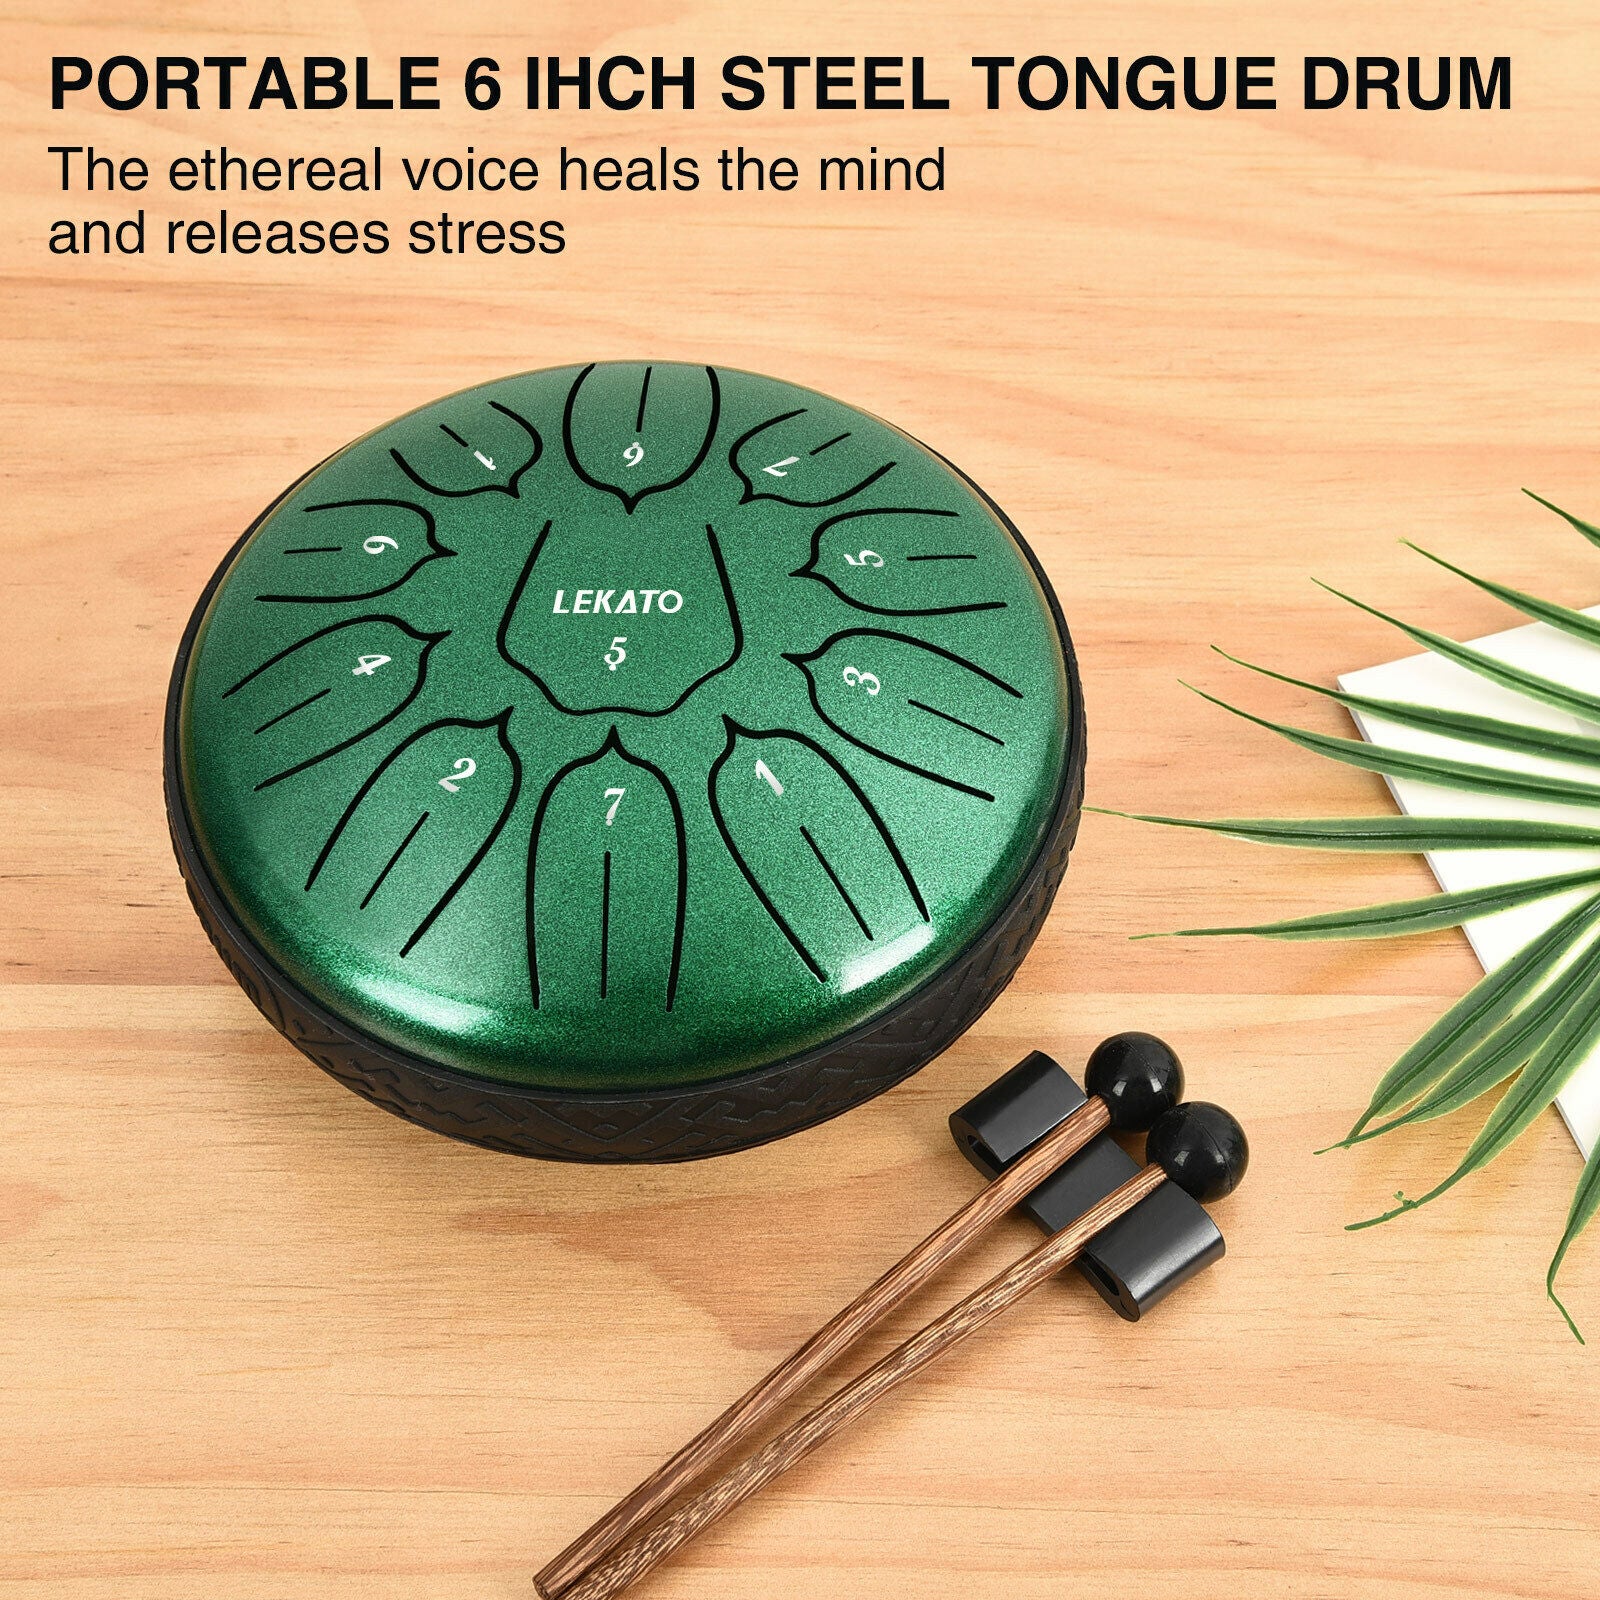 Steel Tongue Drum with Drumsticks